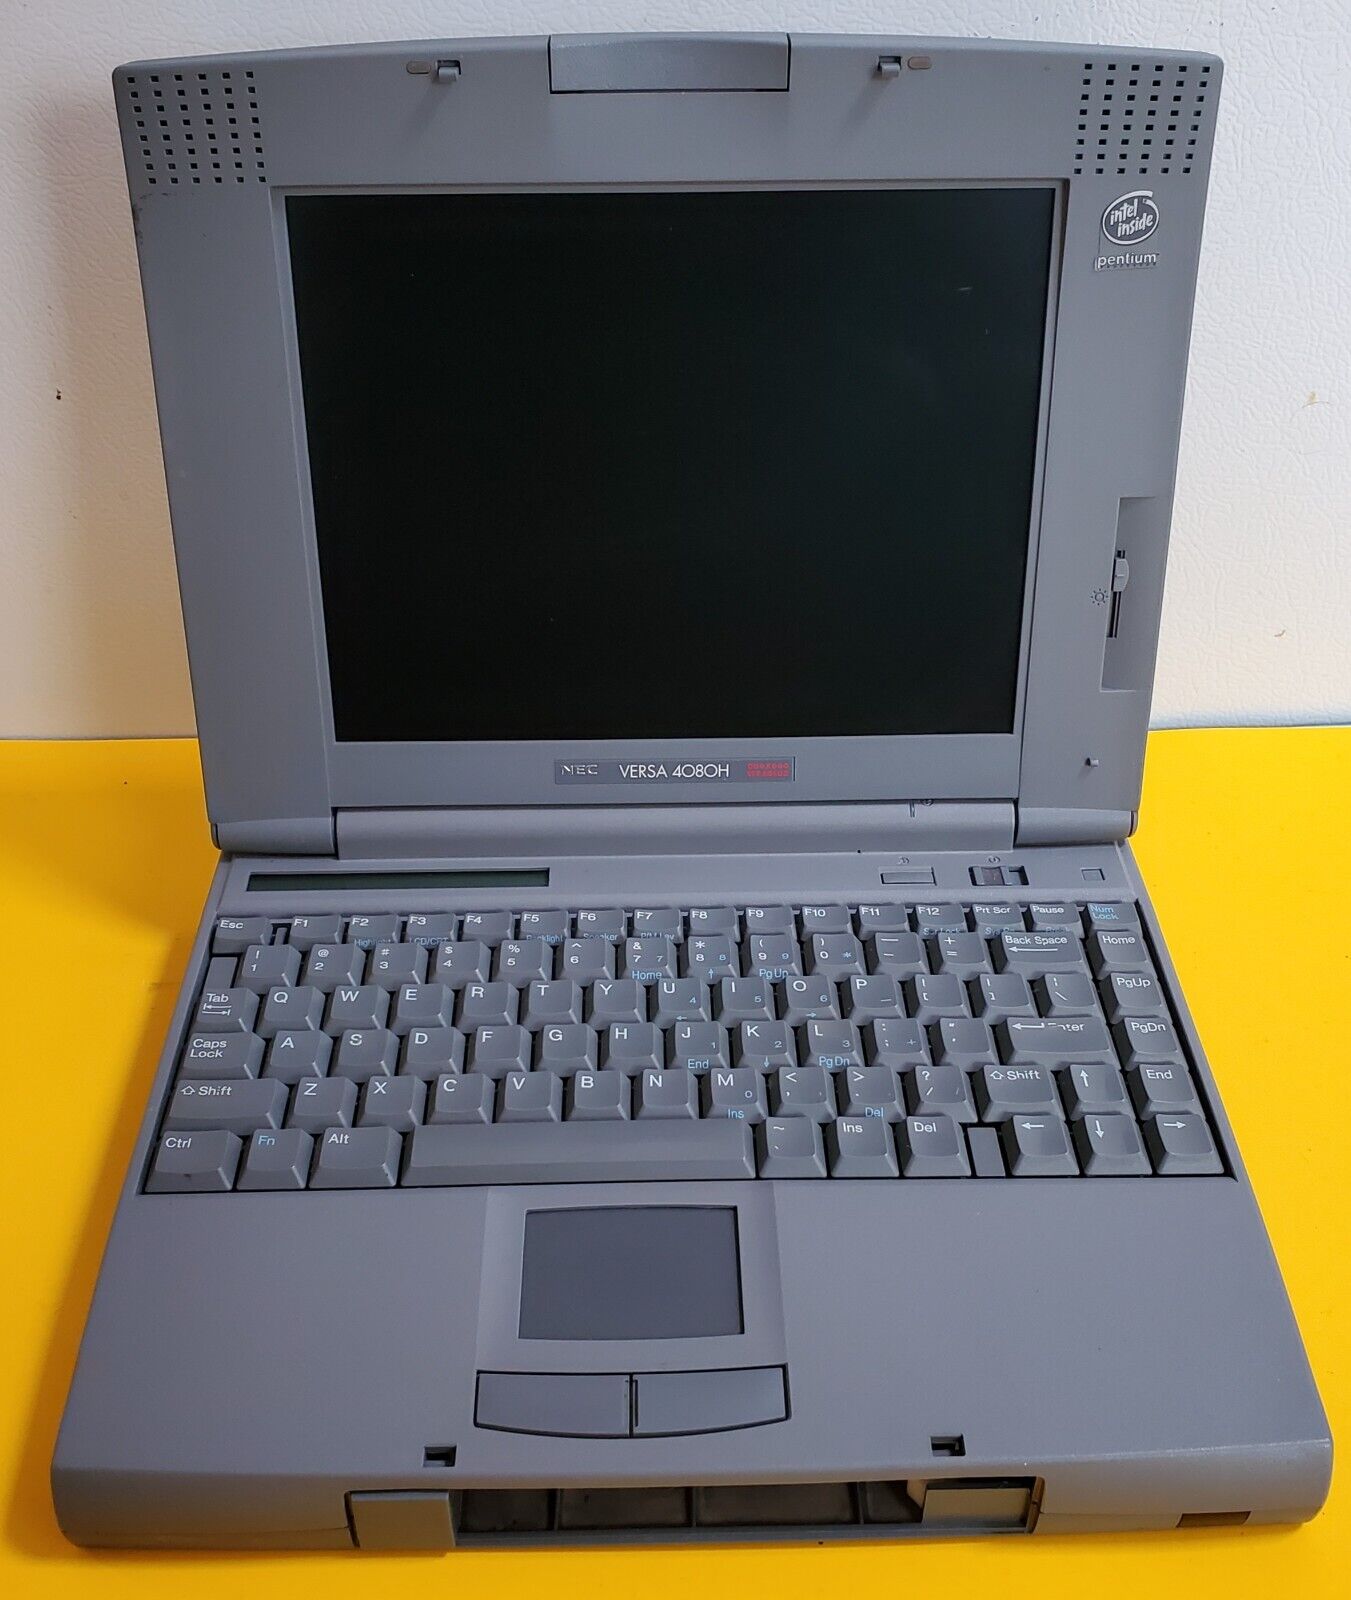 VINTAGE NEC Versa 4080H Model PC-6120 Notebook Laptop Computer - AS IS